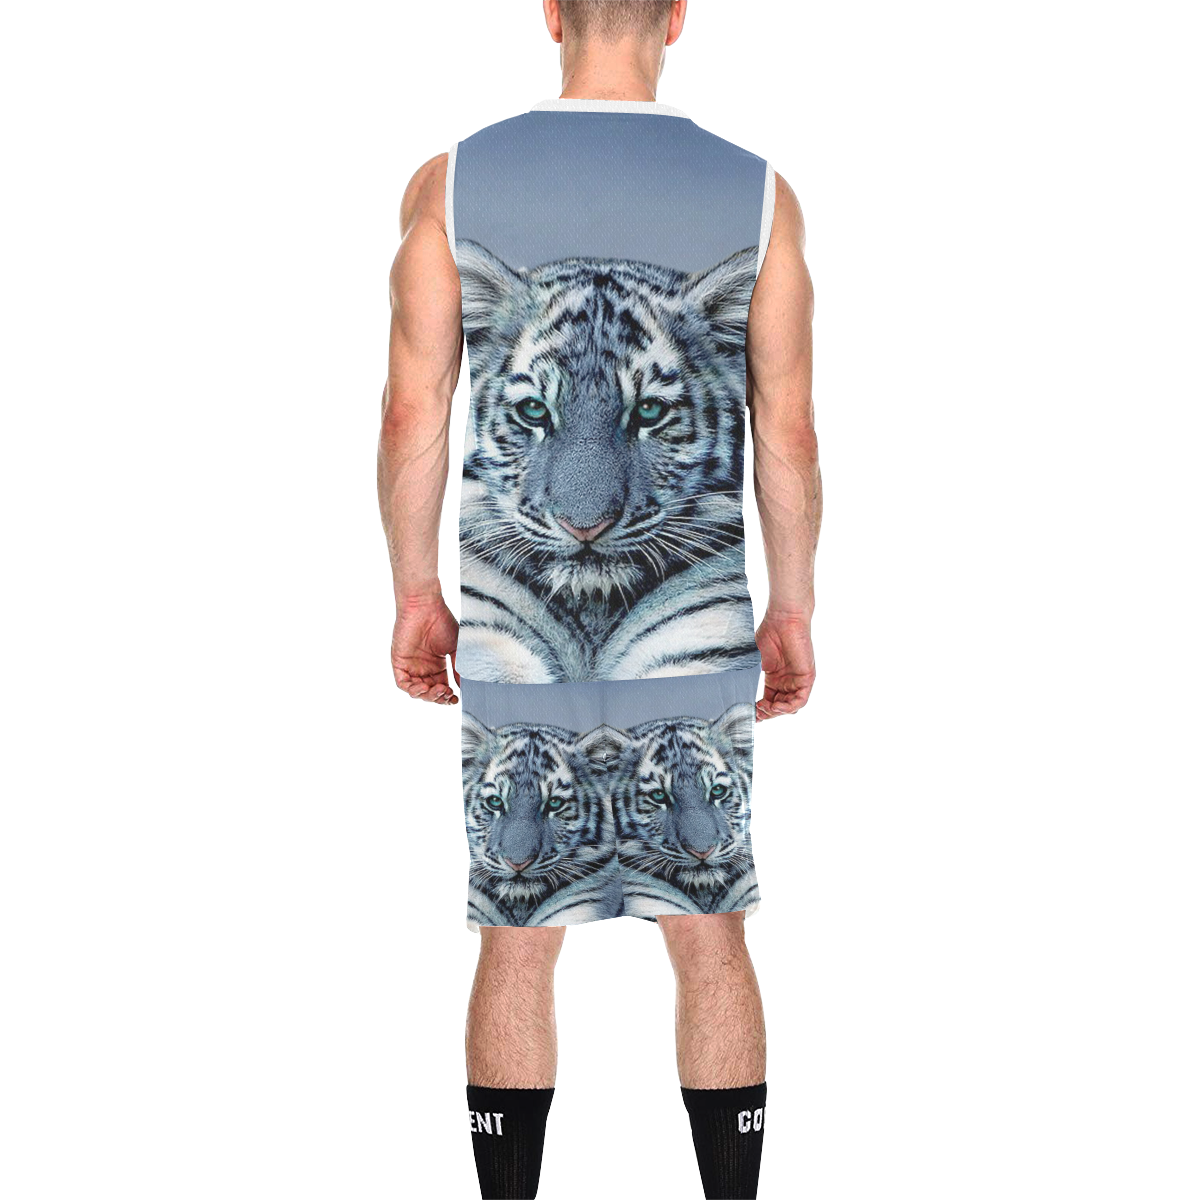 Blue White Tiger All Over Print Basketball Uniform